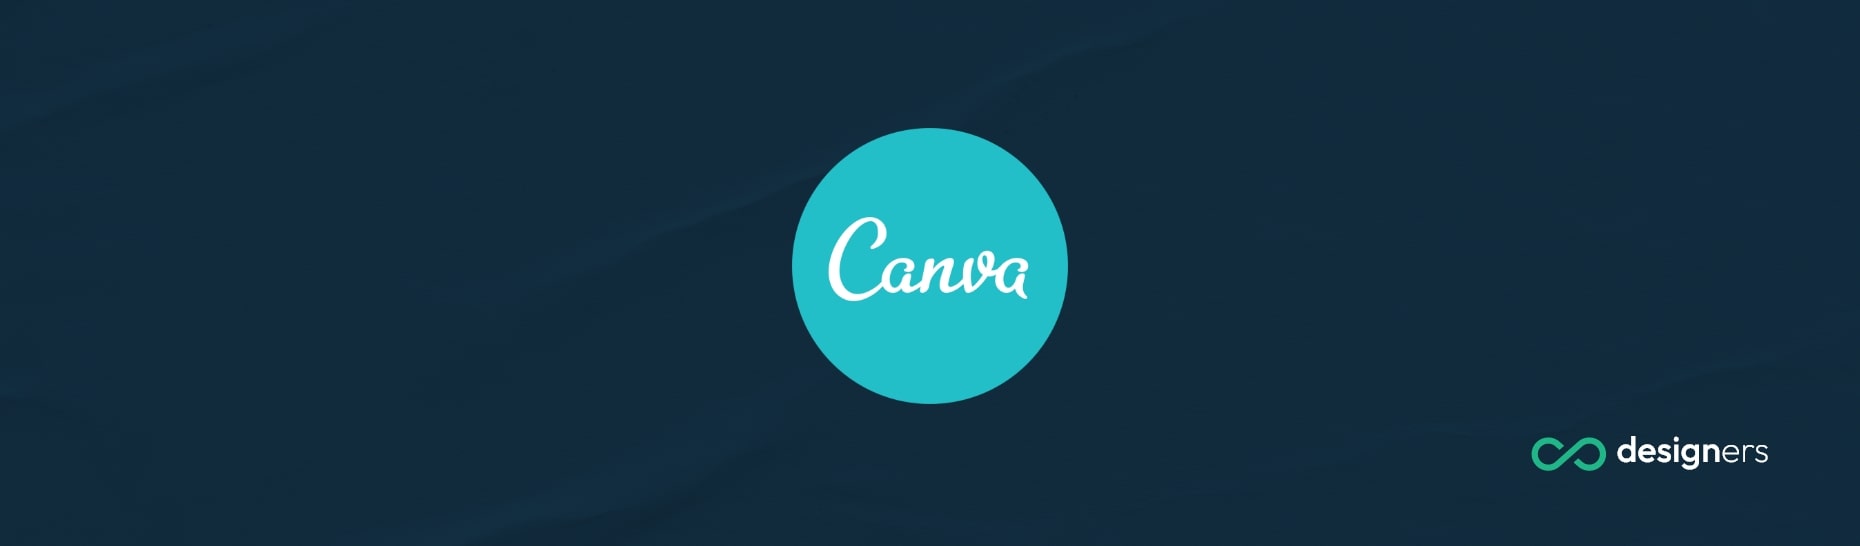 How Do I Make a Binder Cover on Canva?